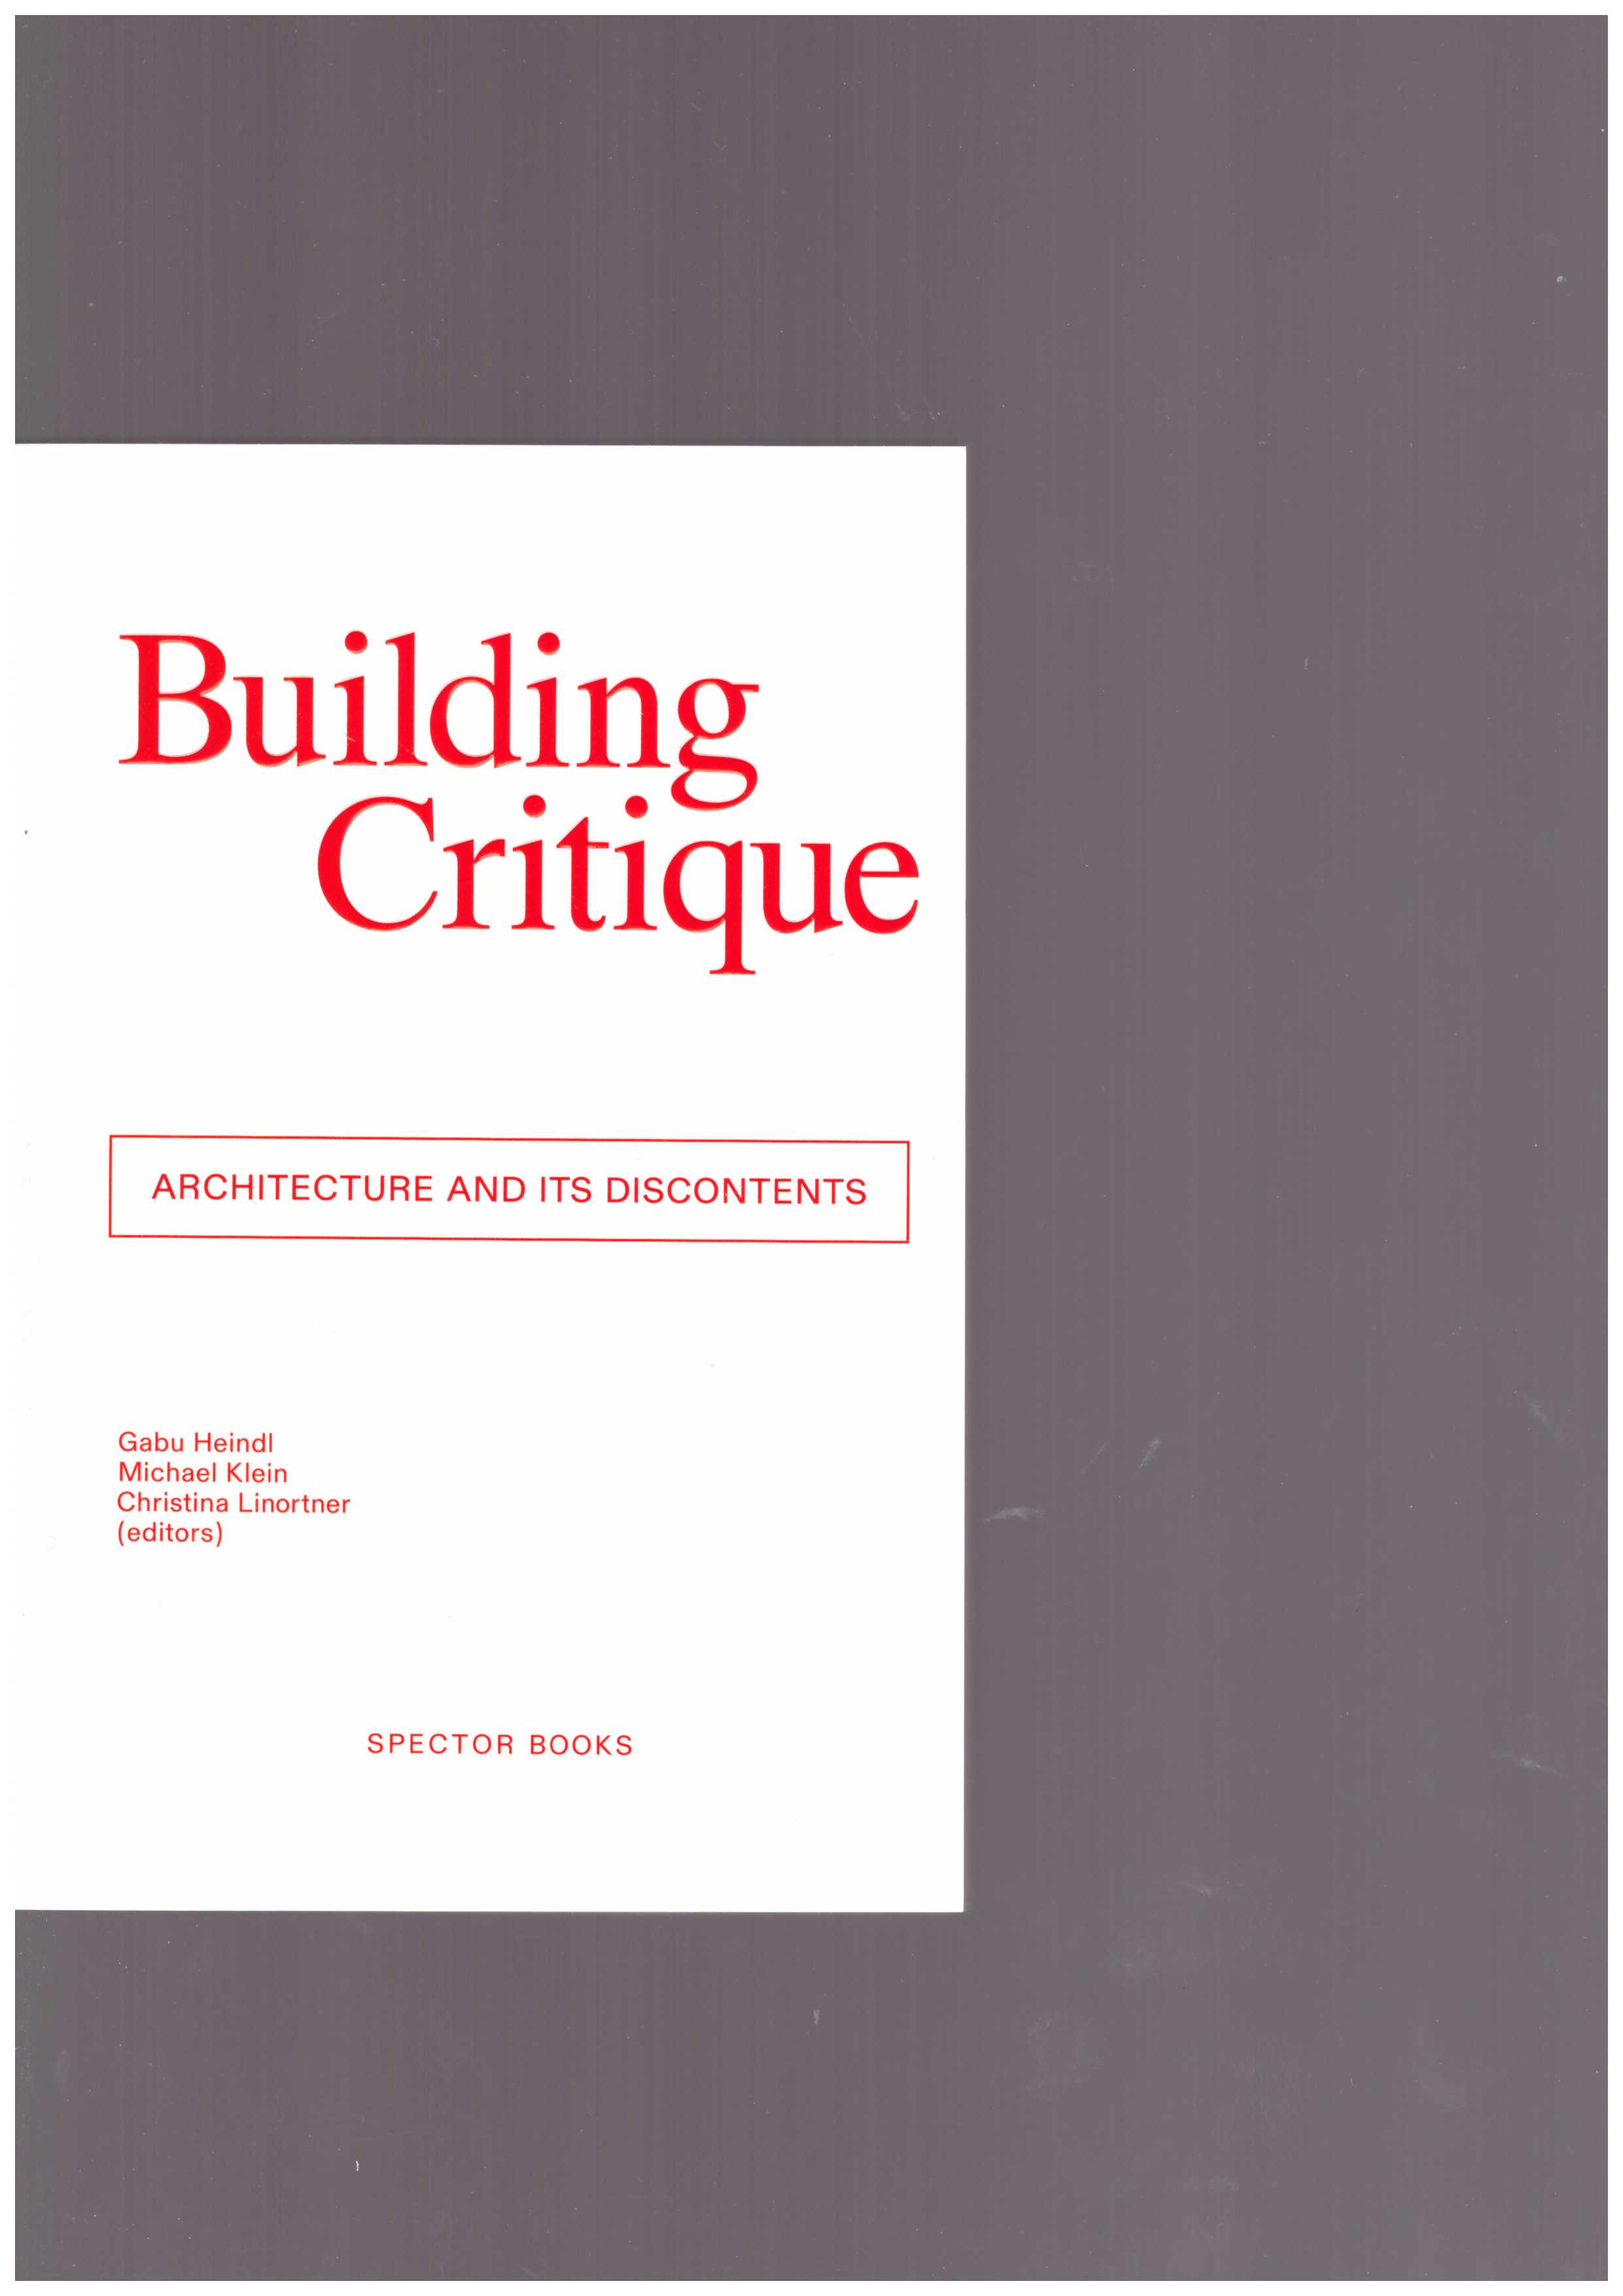 HEINDL, Gabu; KLEIN, Michael; LINORTNER, Chrisitna (eds.) - Building Critique. Architecture and its Discontents